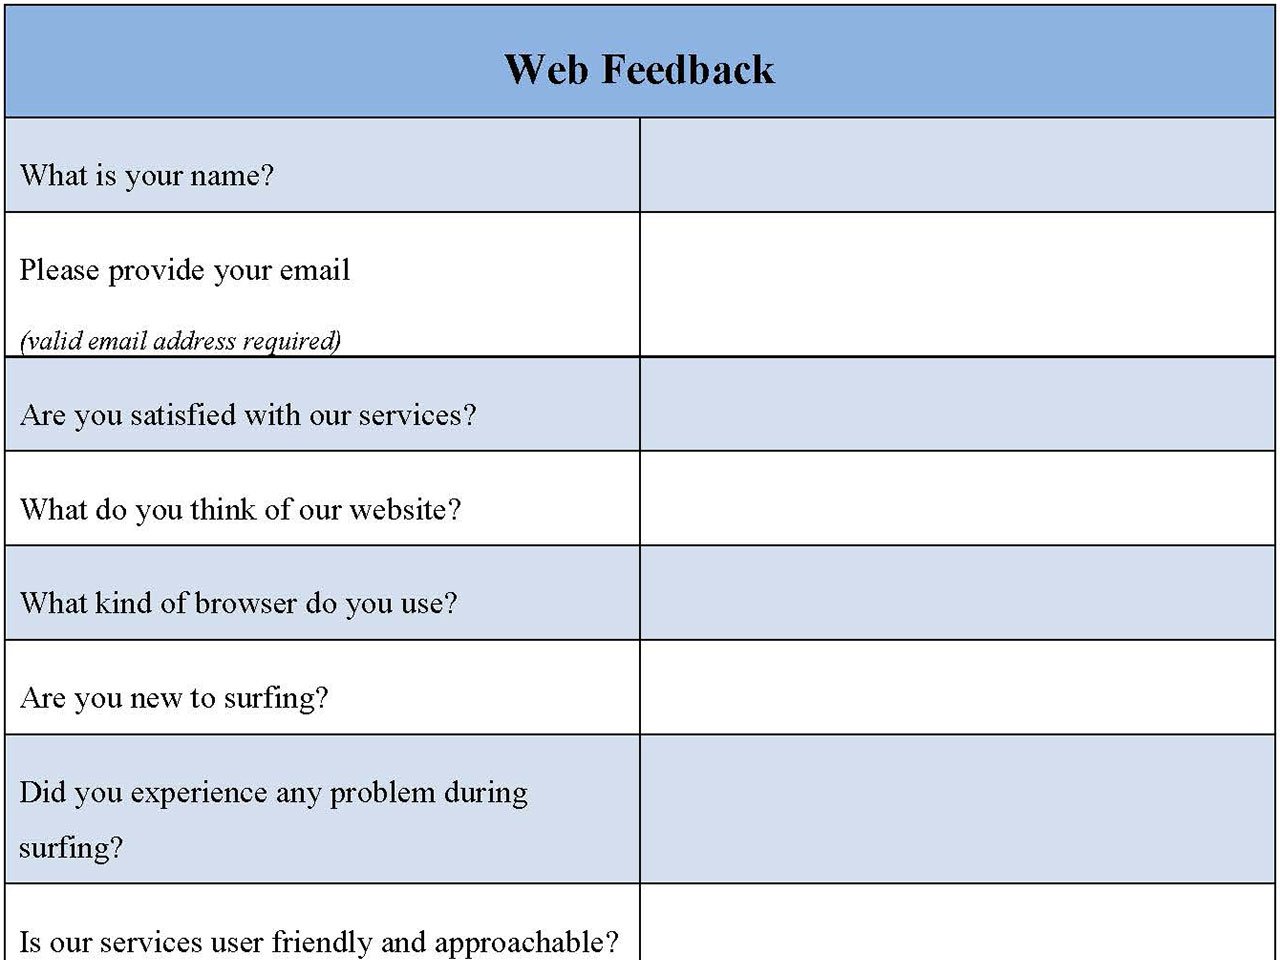 Web Feedback Form